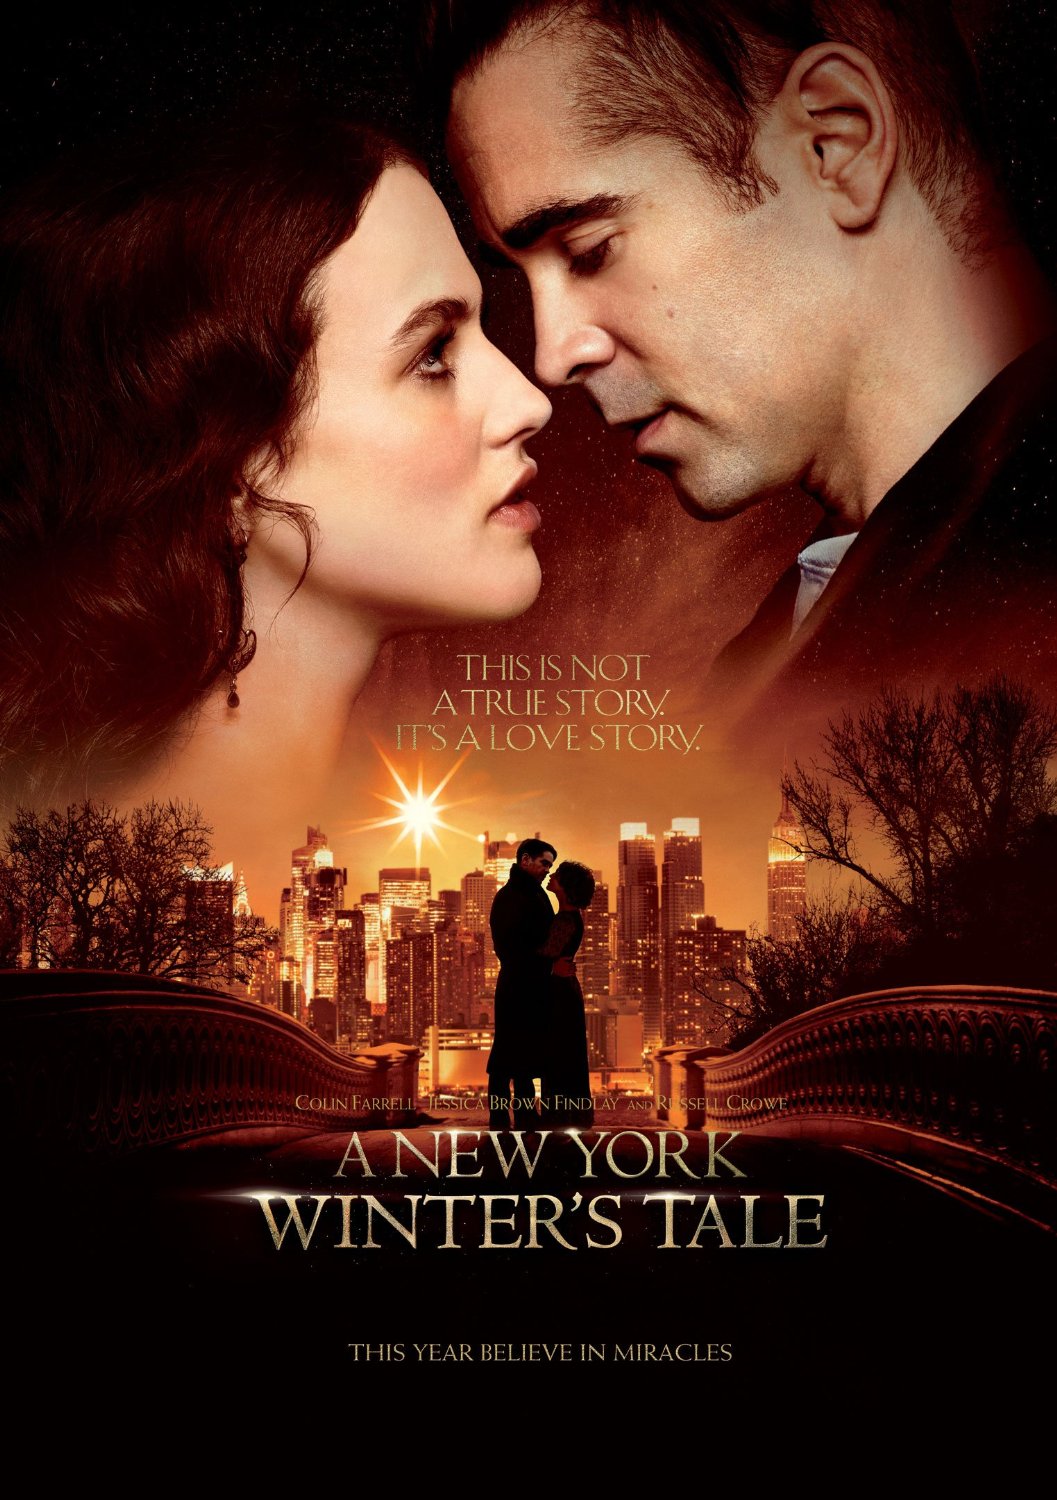 A New York Winter’s Tale (2014)dvdplanetstorepk